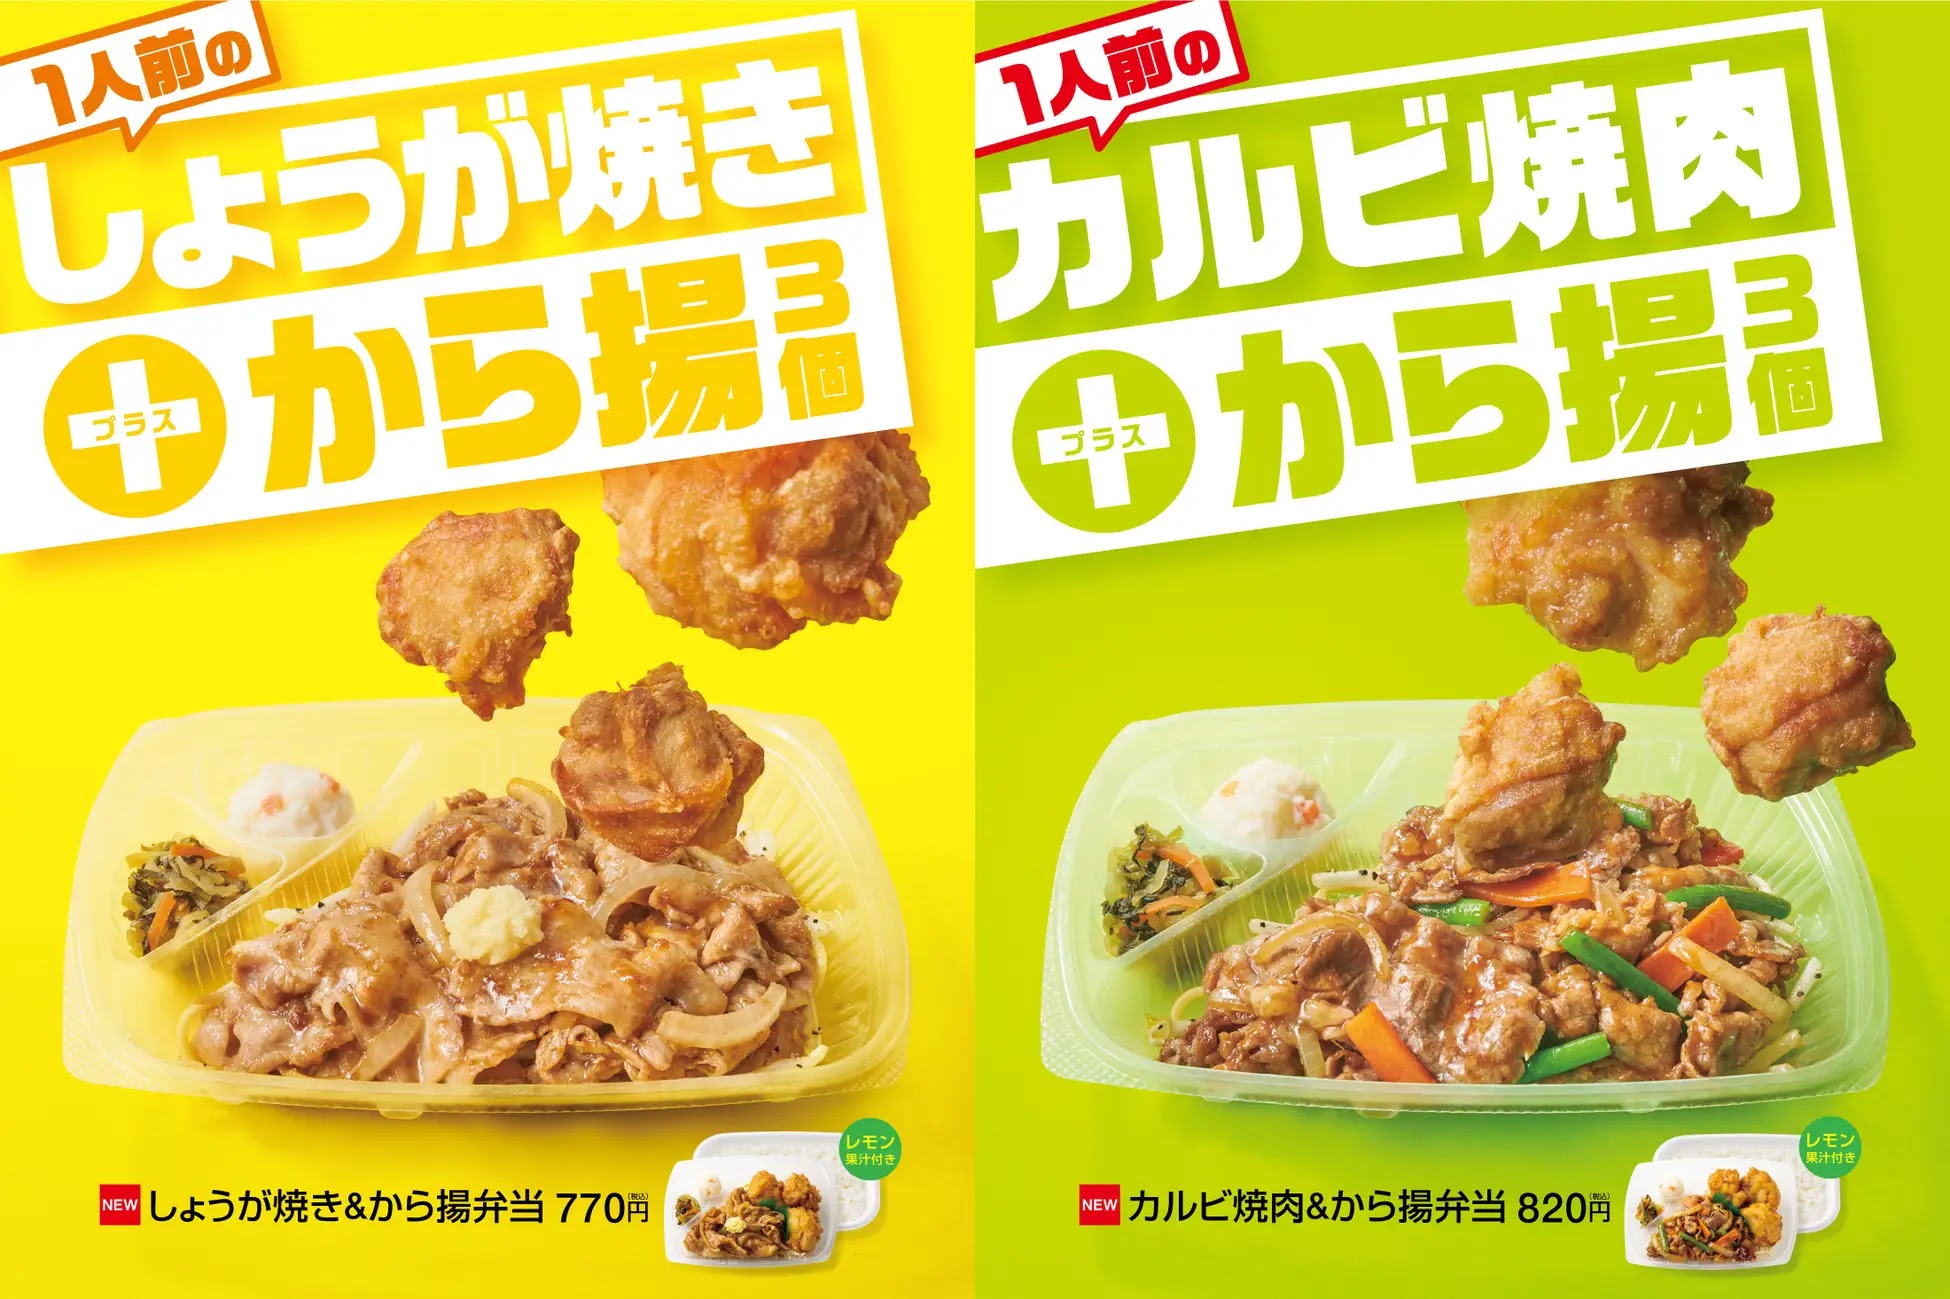 日本連鎖便當 Hotto Motto（ほっともっと）推出肉X肉新菜單、薑燒豬肉、牛五花燒肉、新唐揚炸雞便當成為肉類愛好者的福音